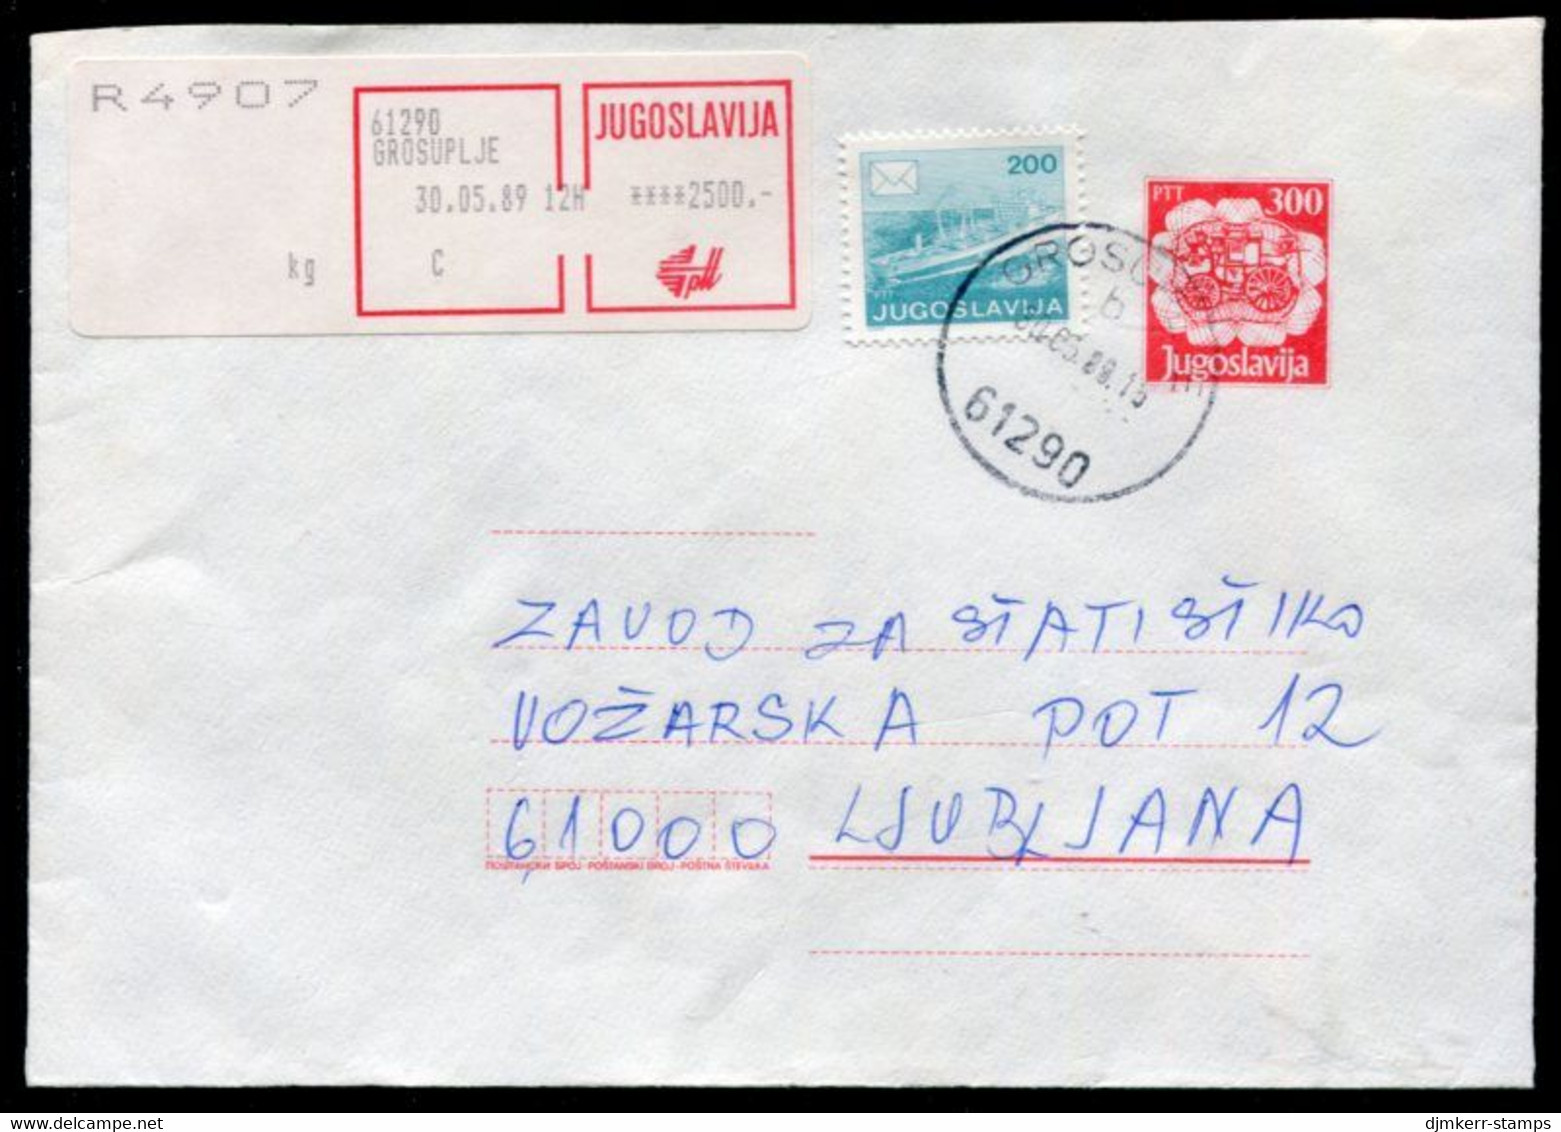 YUGOSLAVIA 1989 Mailcoach 300 D.stationery Envelope Registered With Additional Franking.  Michel U89 - Postal Stationery